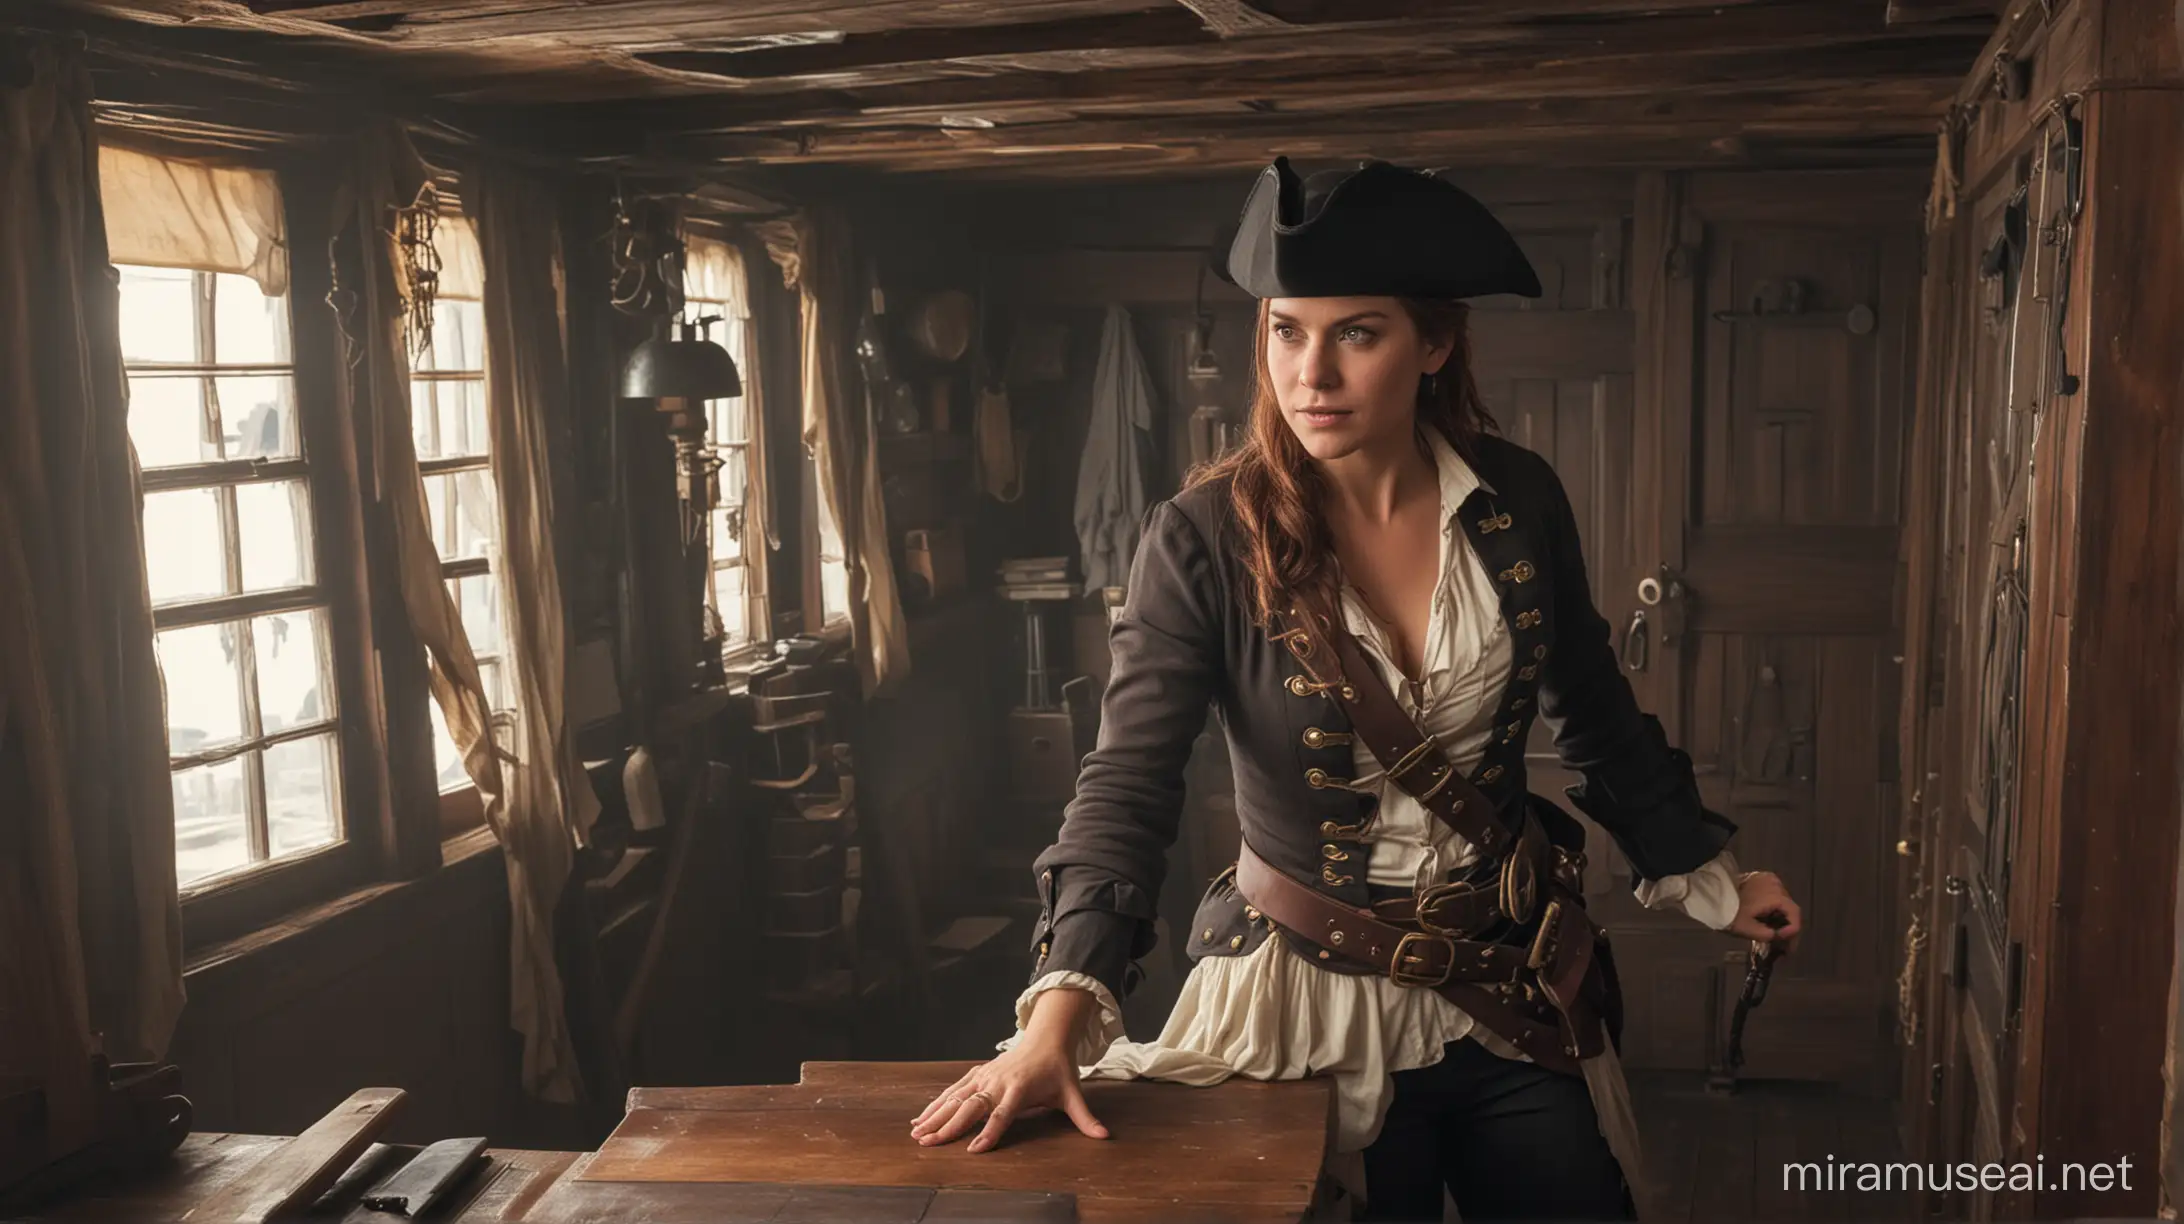 Female Pirate in Captains Quarters Amidst Treasure Chests